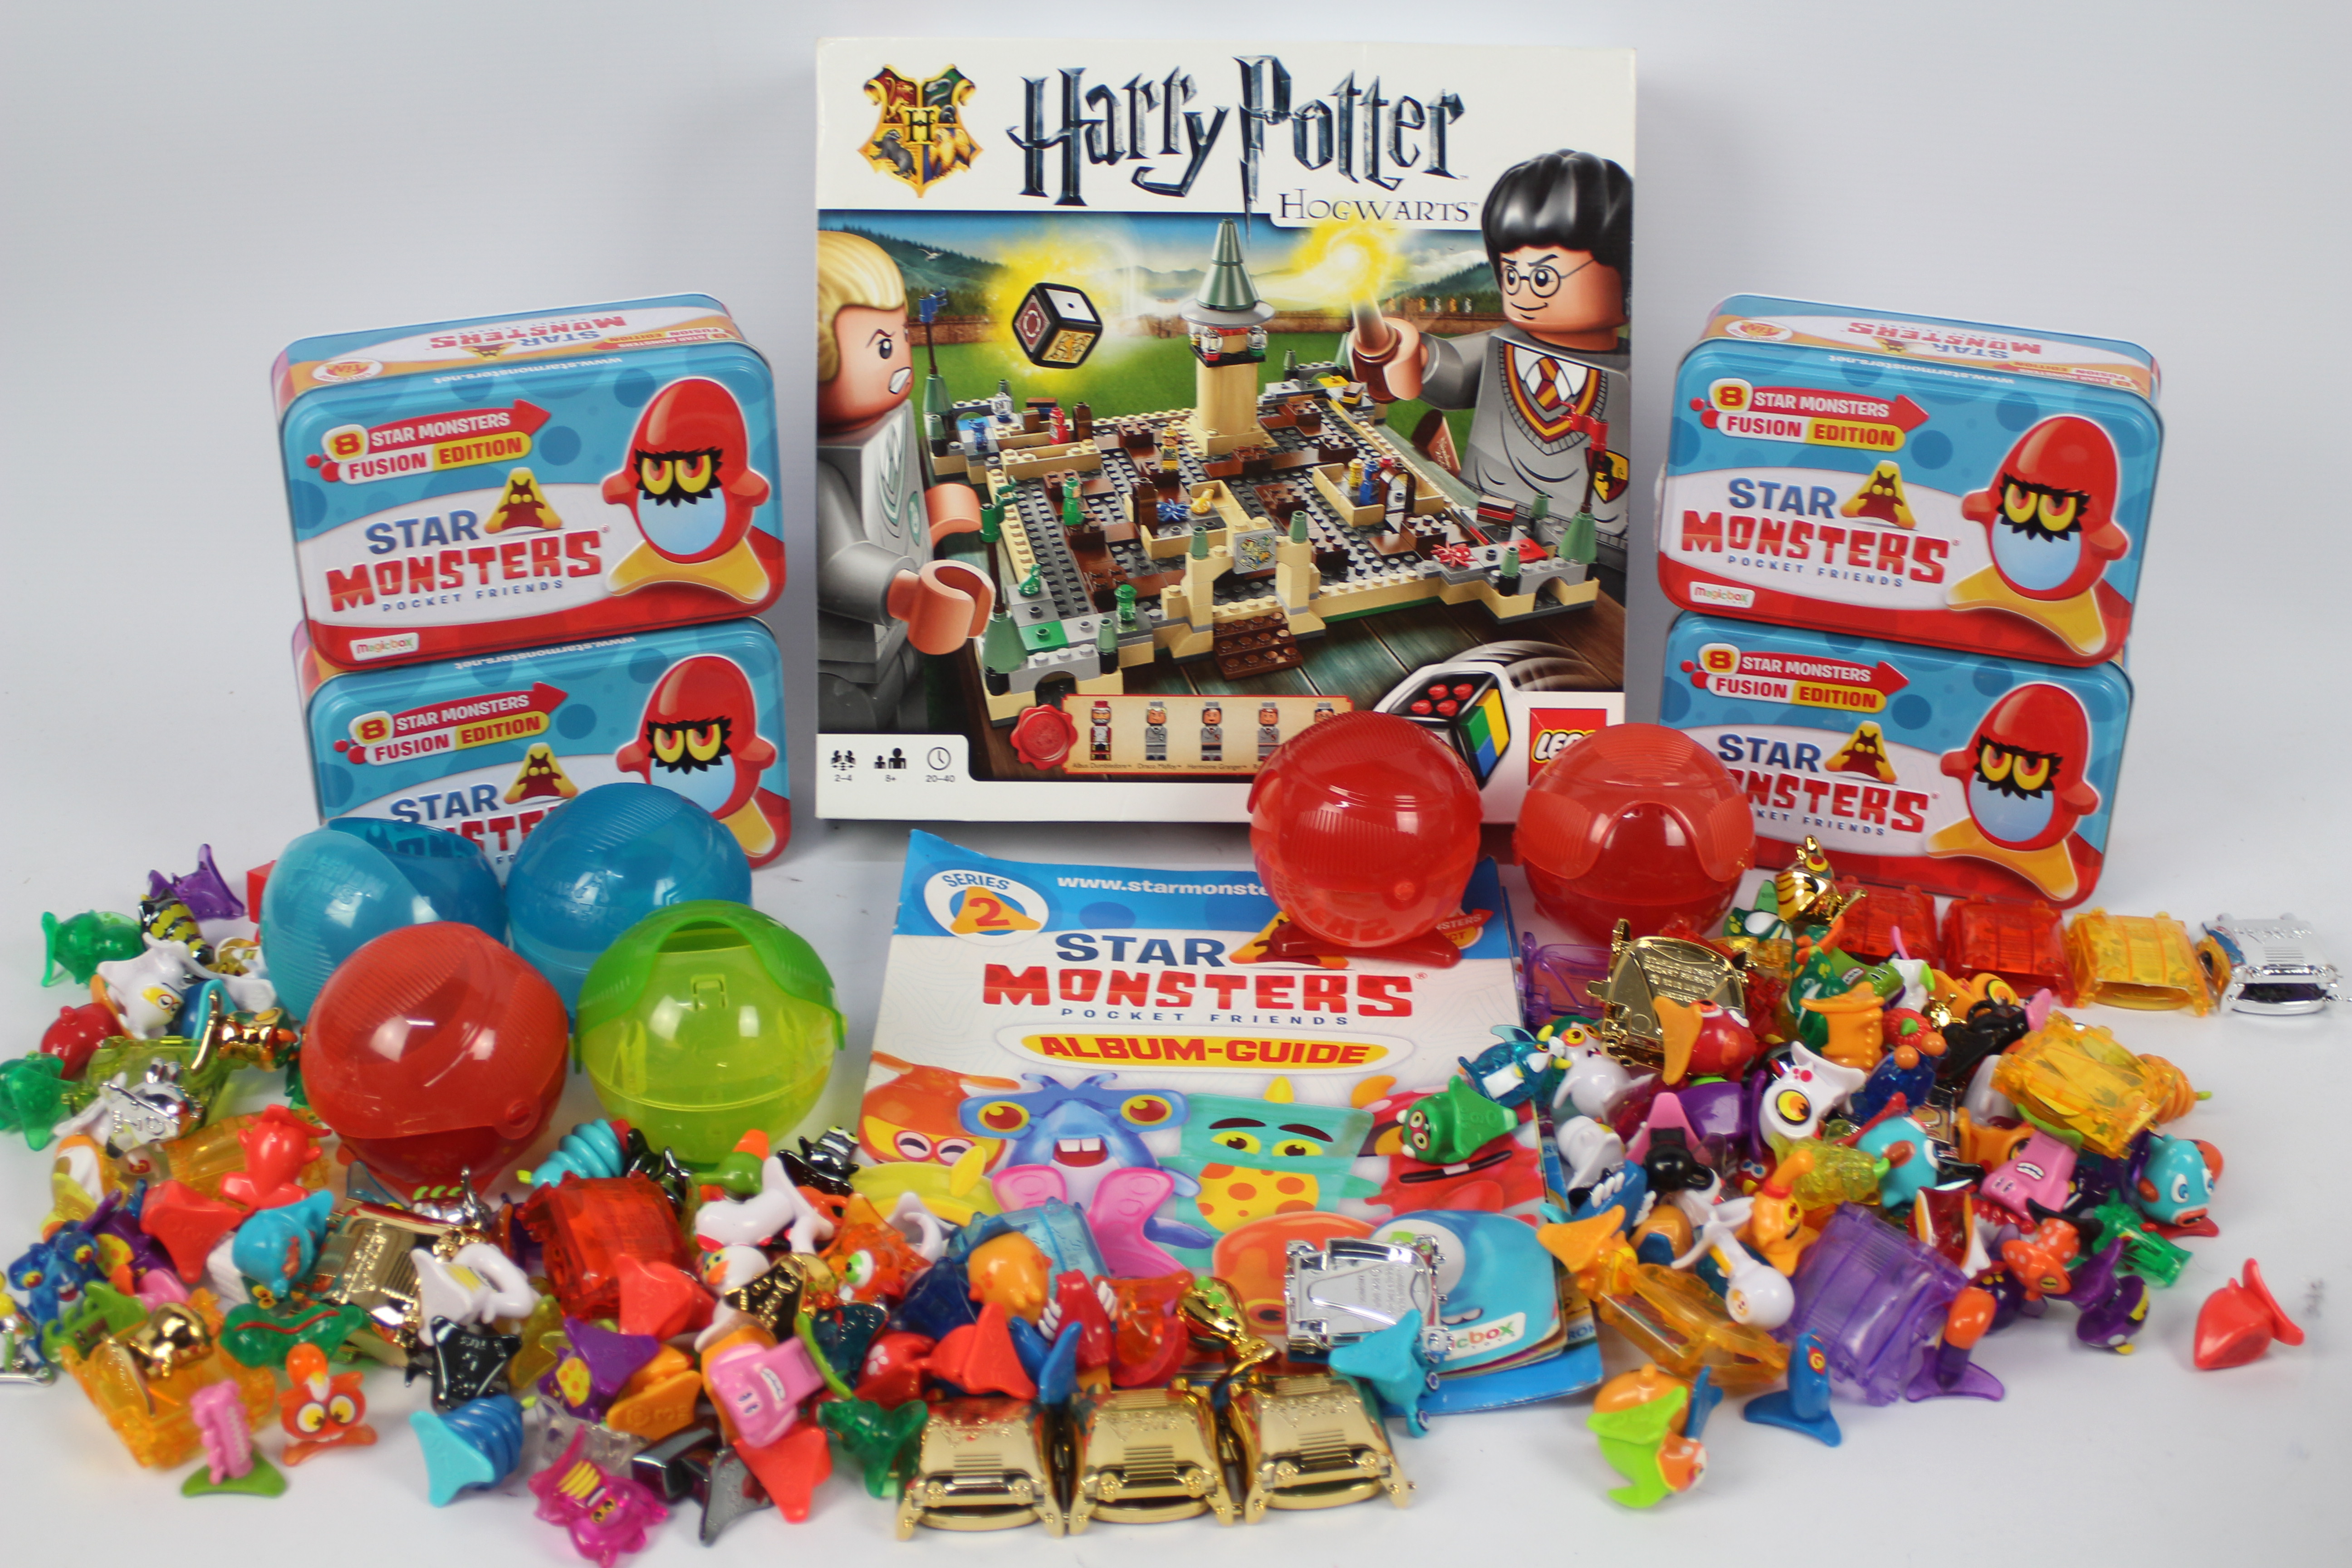 Lego - Starmonsters - A Harry Potter 'Ho